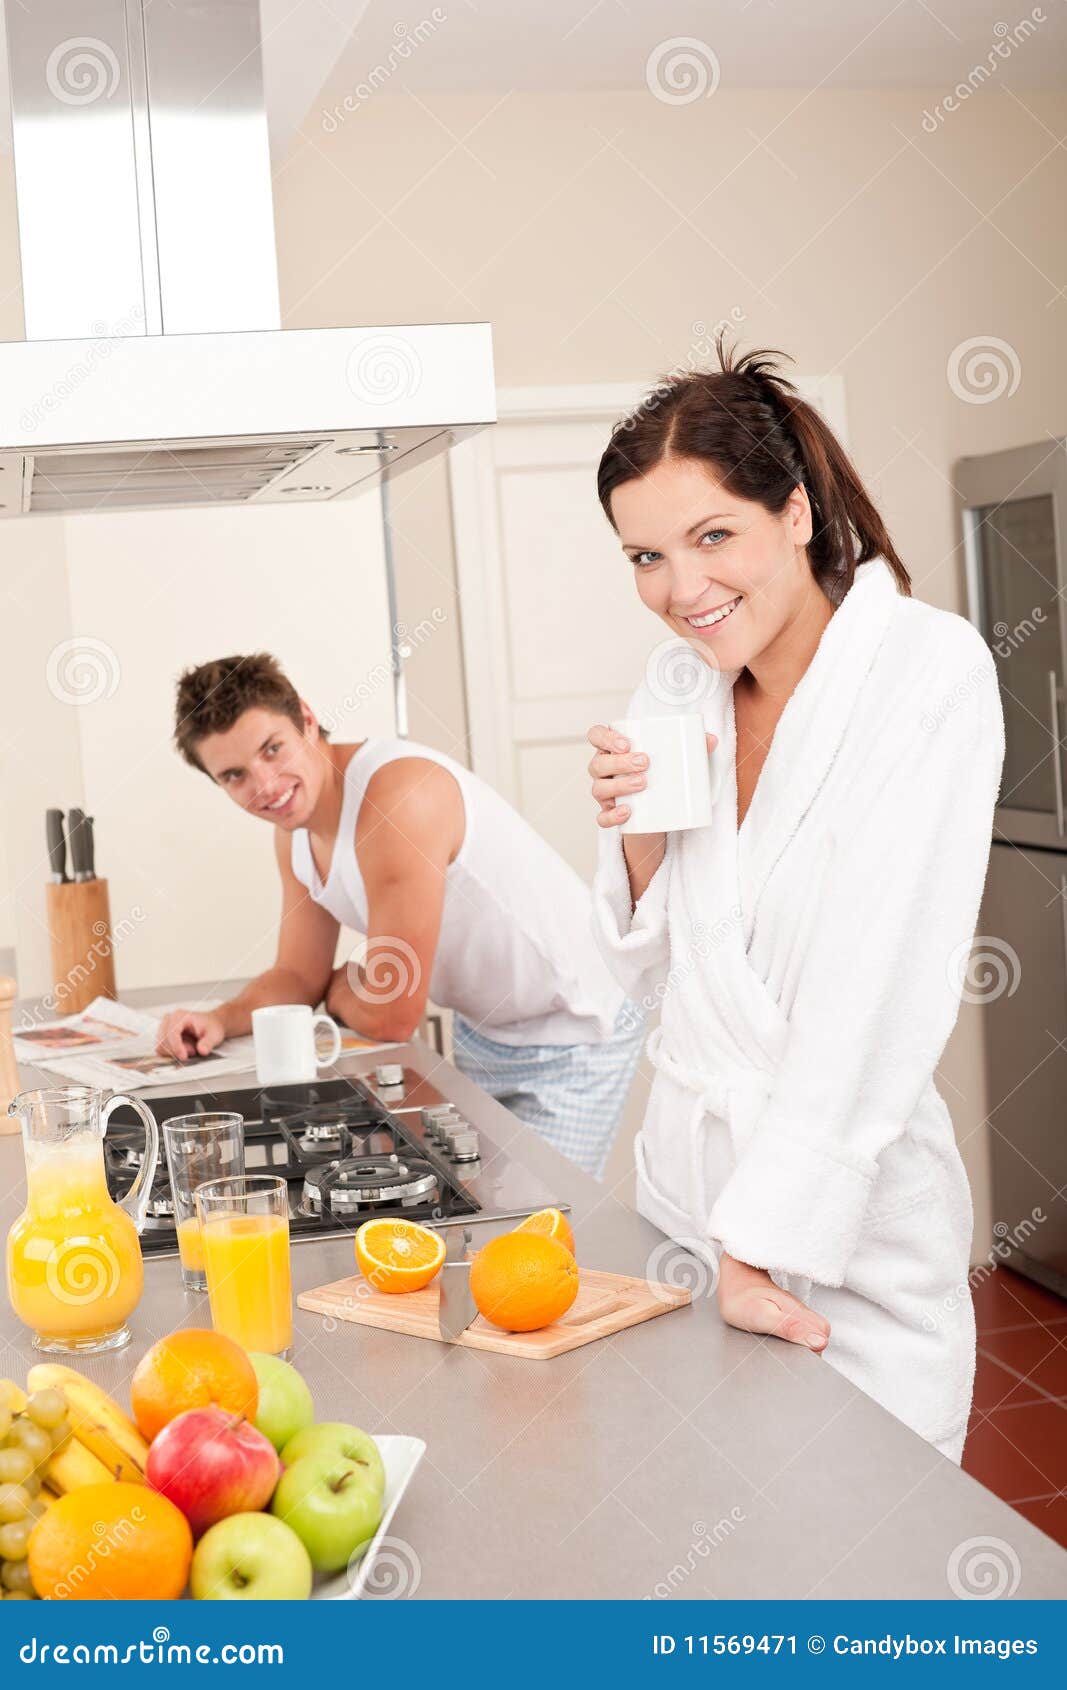 https://thumbs.dreamstime.com/z/happy-couple-having-breakfast-kitchen-11569471.jpg